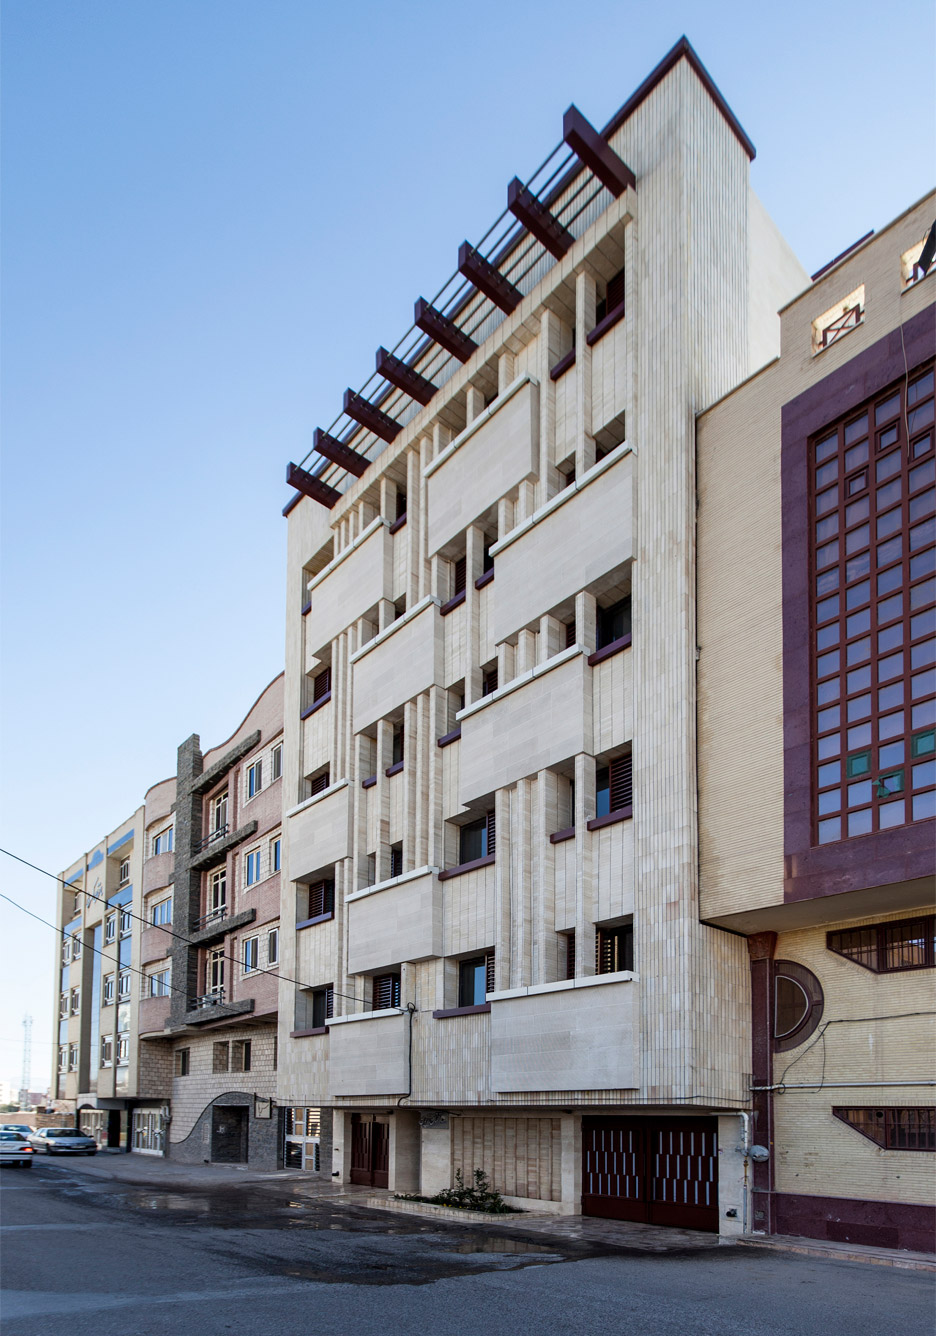 Khish-Khaneh Residential Building in Iran by Behzad Yaghmaei and Azadeh Mahmoudi